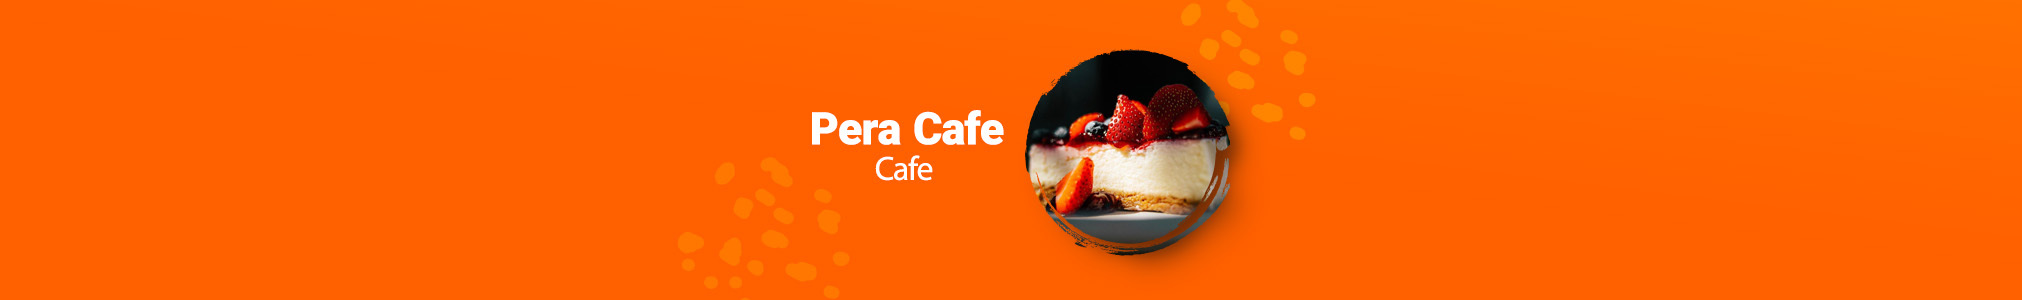 Pera Cafe